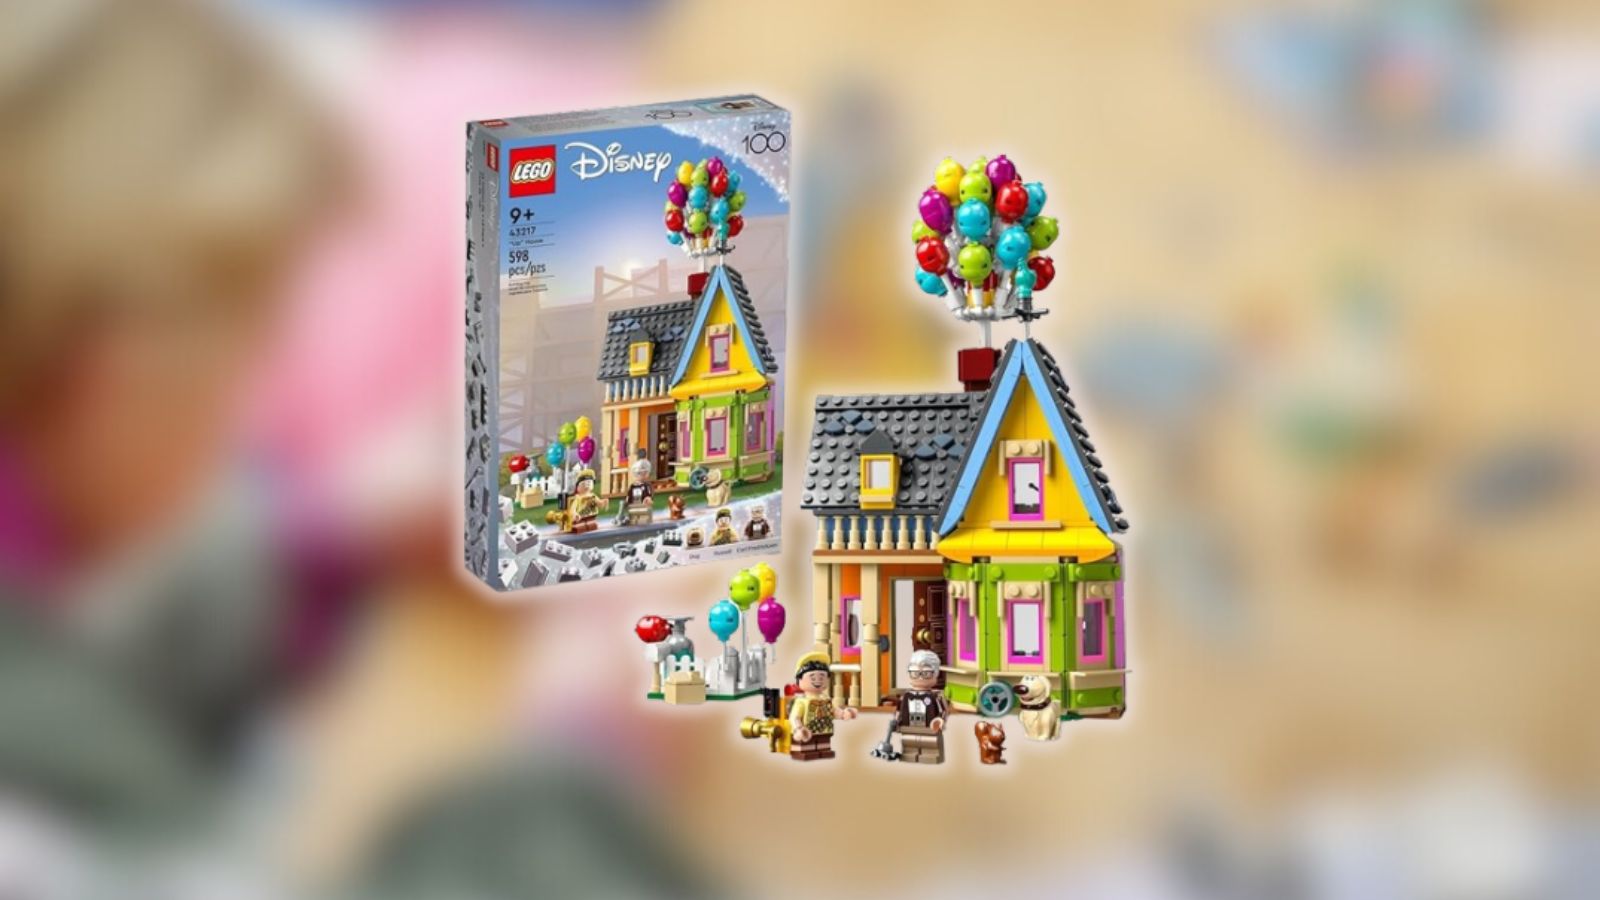 LEGO IDEAS - Disney Pixar's Up